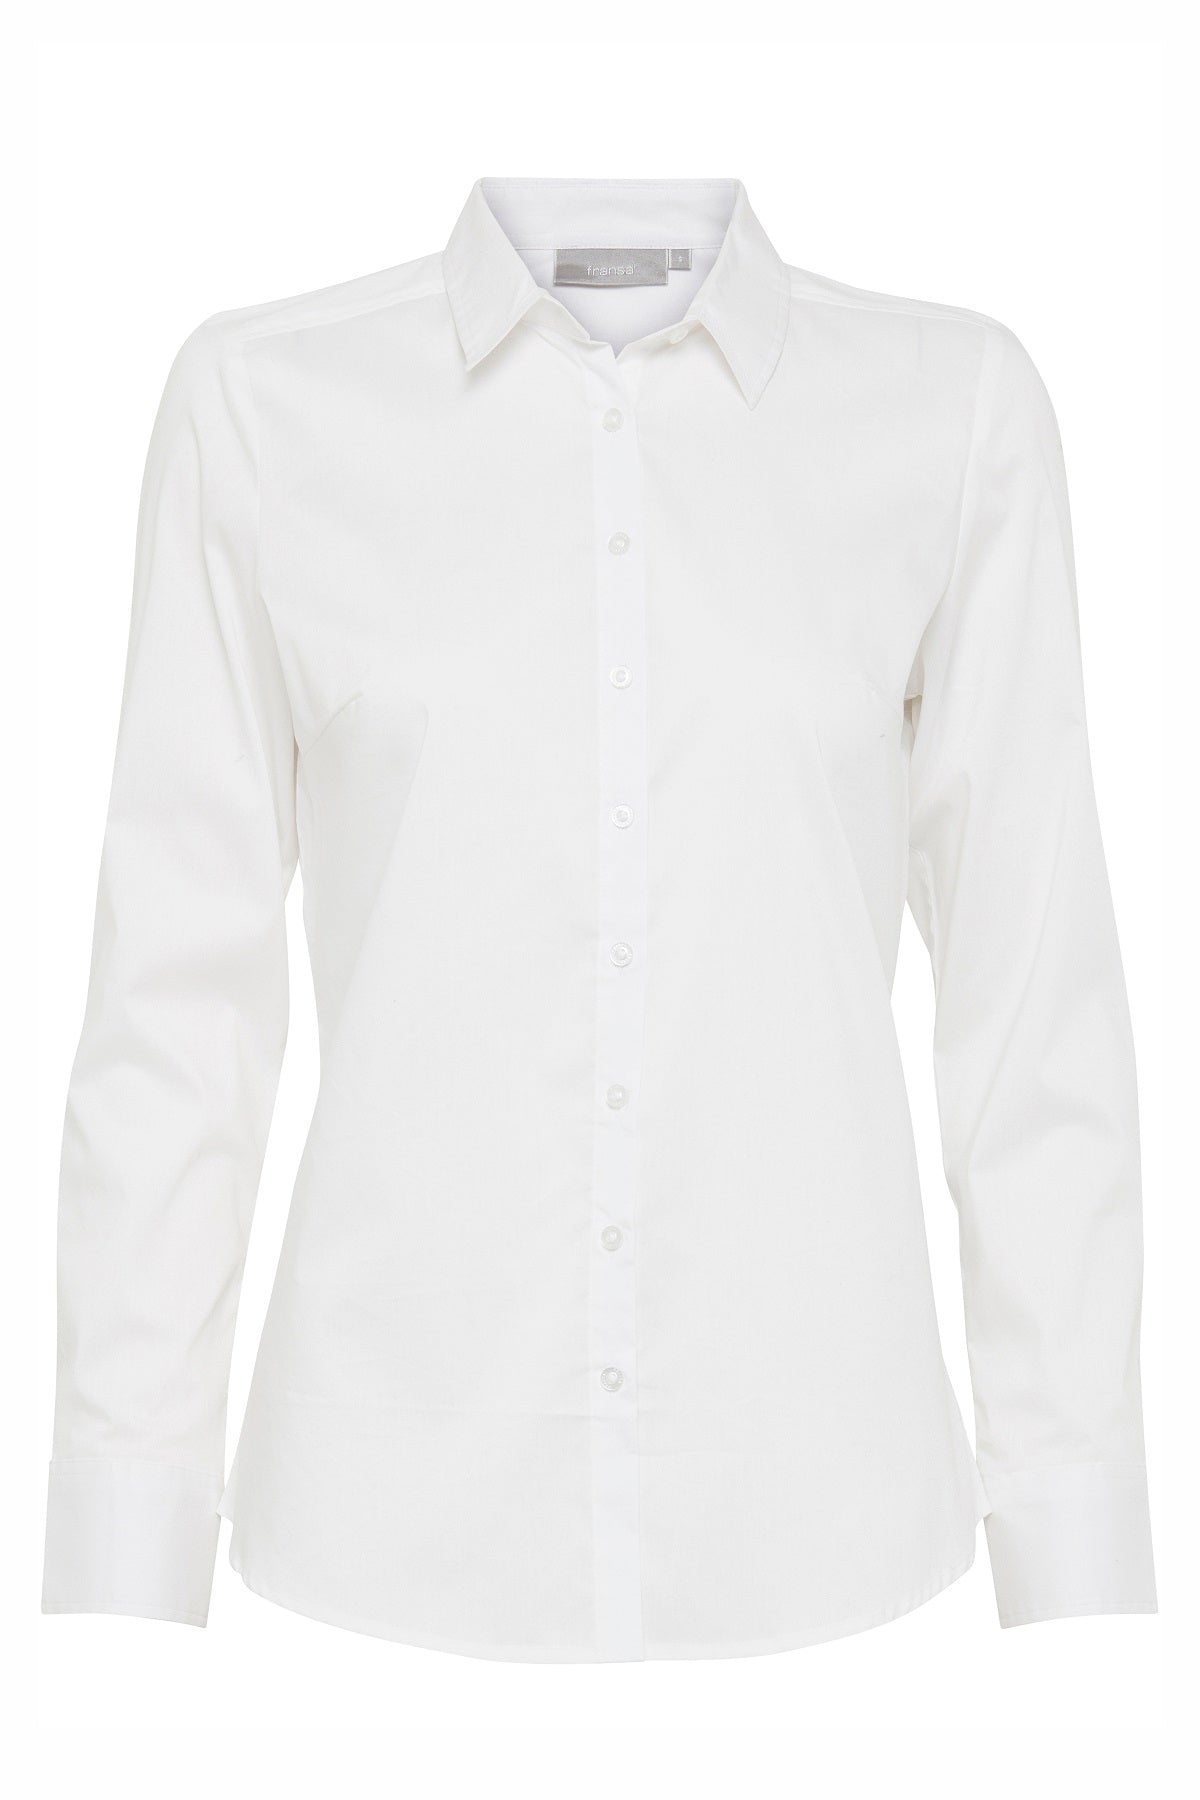 Fransa Zashirt 1 Shirt, white